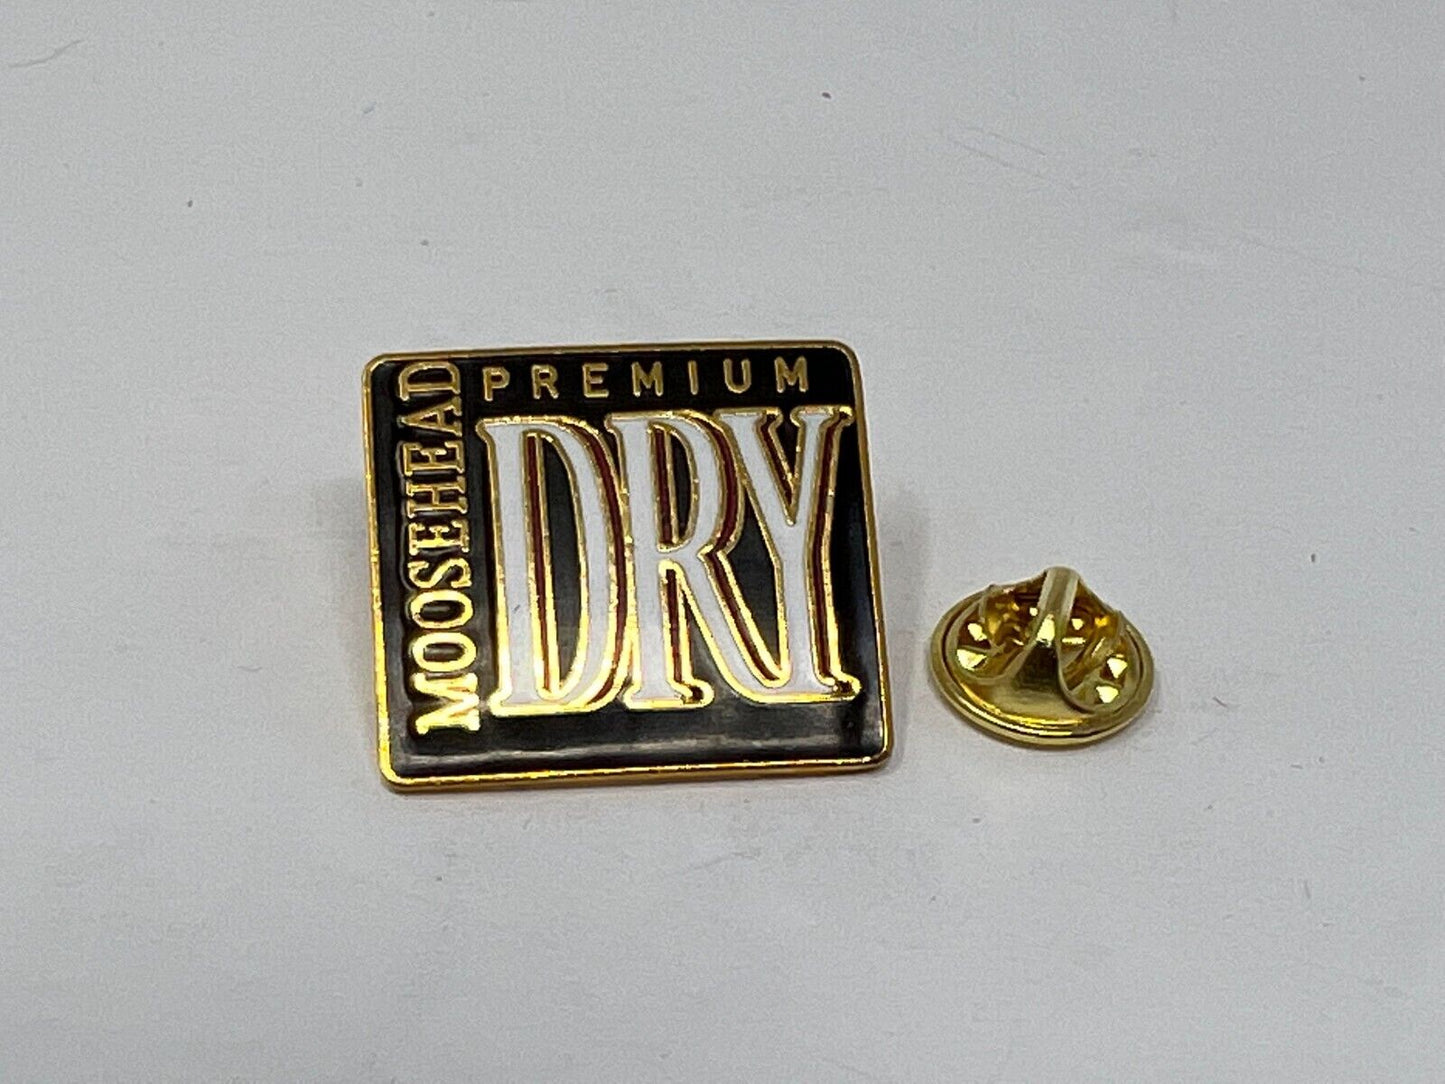 Moosehead Premium Dry Beer & Liquor Lapel Pin